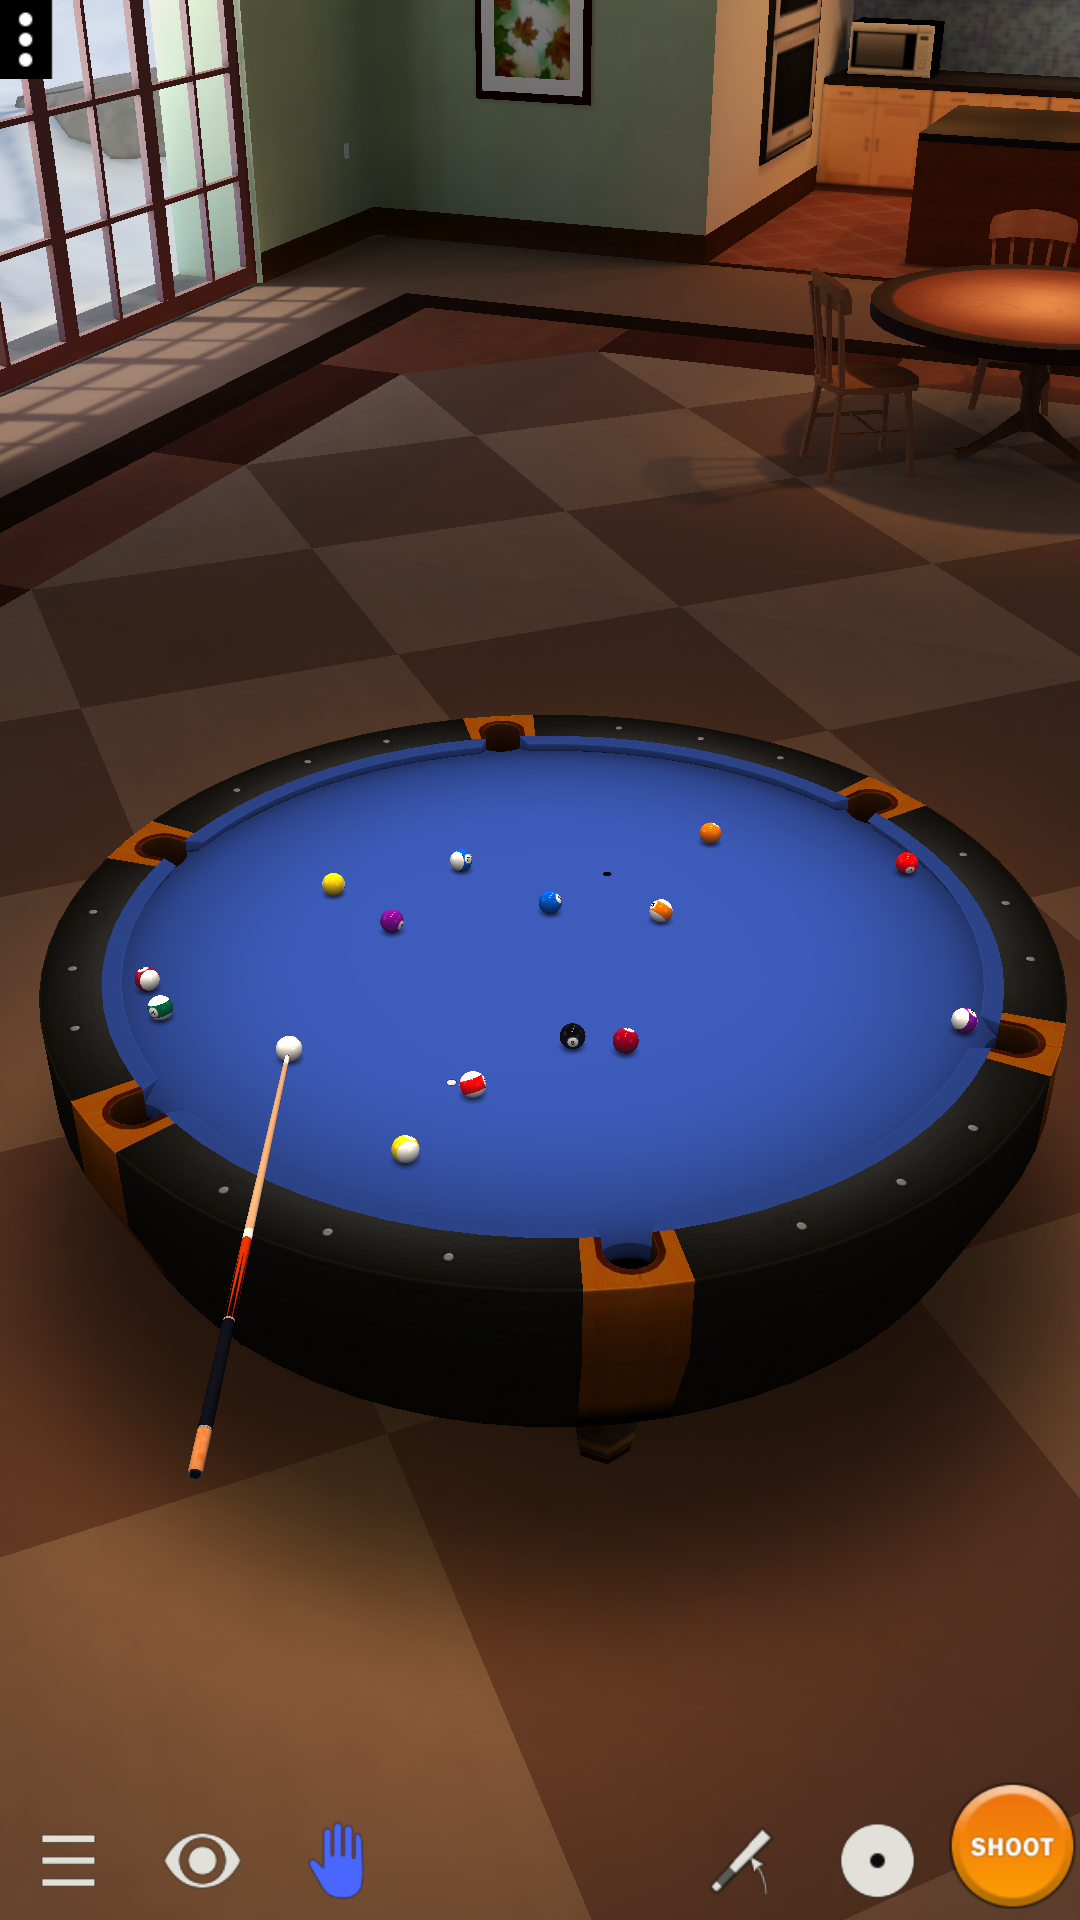 Pool Break 3D Billiards 8 Ball, 9 Ball, Snooker by Kinetic Bytes